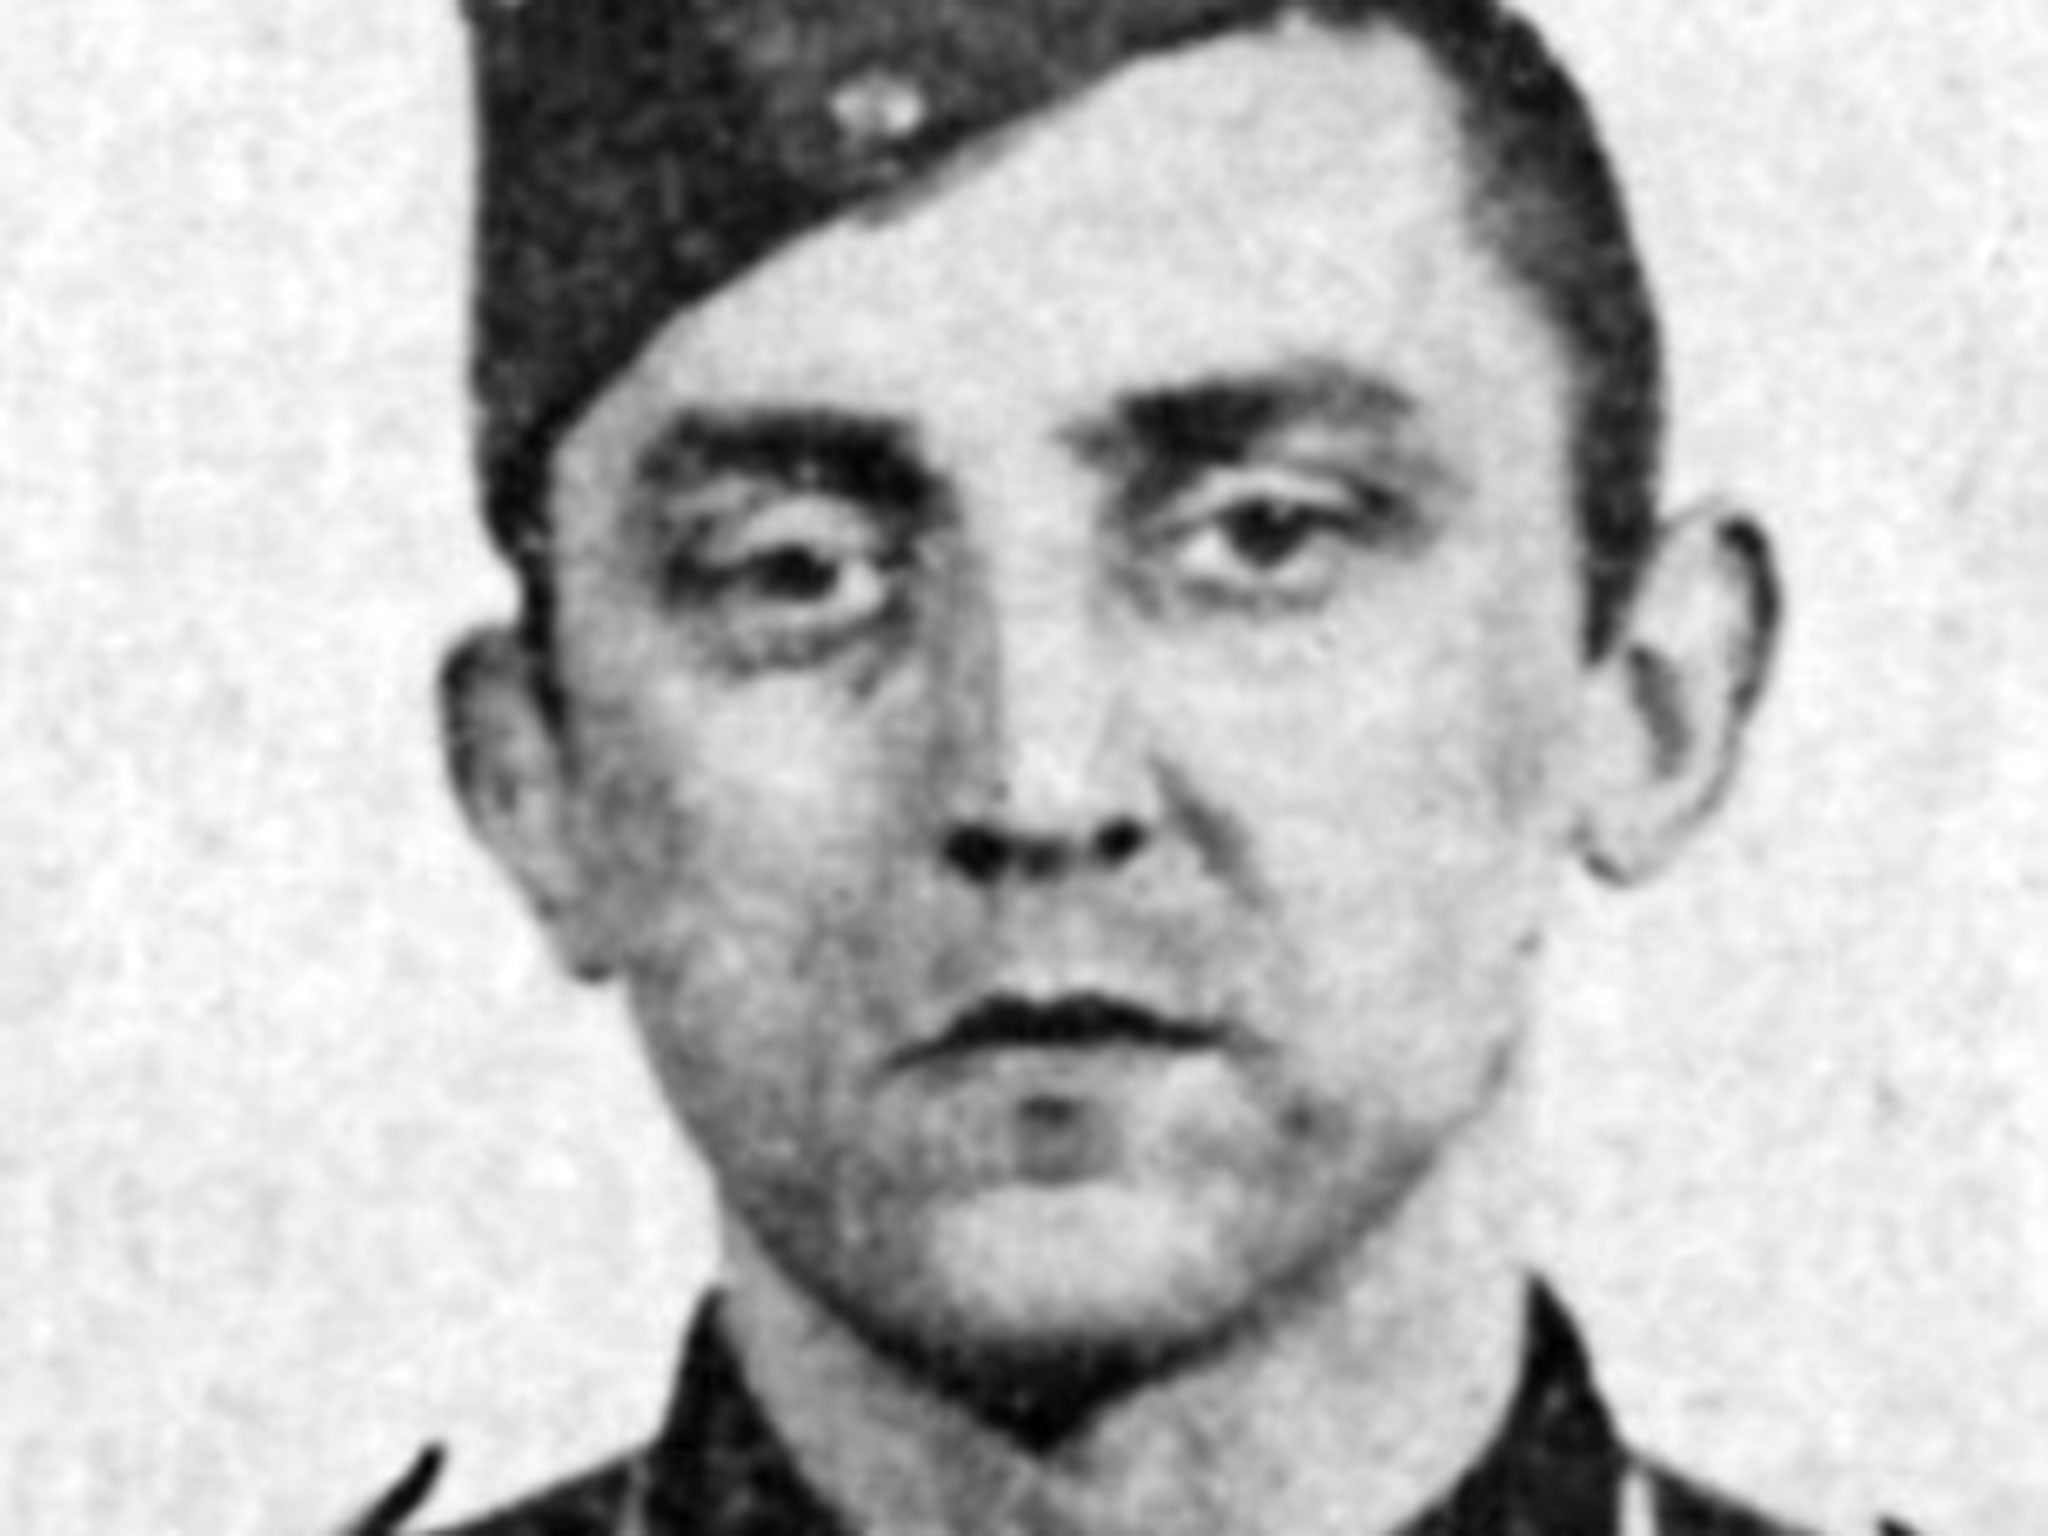 Hubert Zafke in Nazi uniform